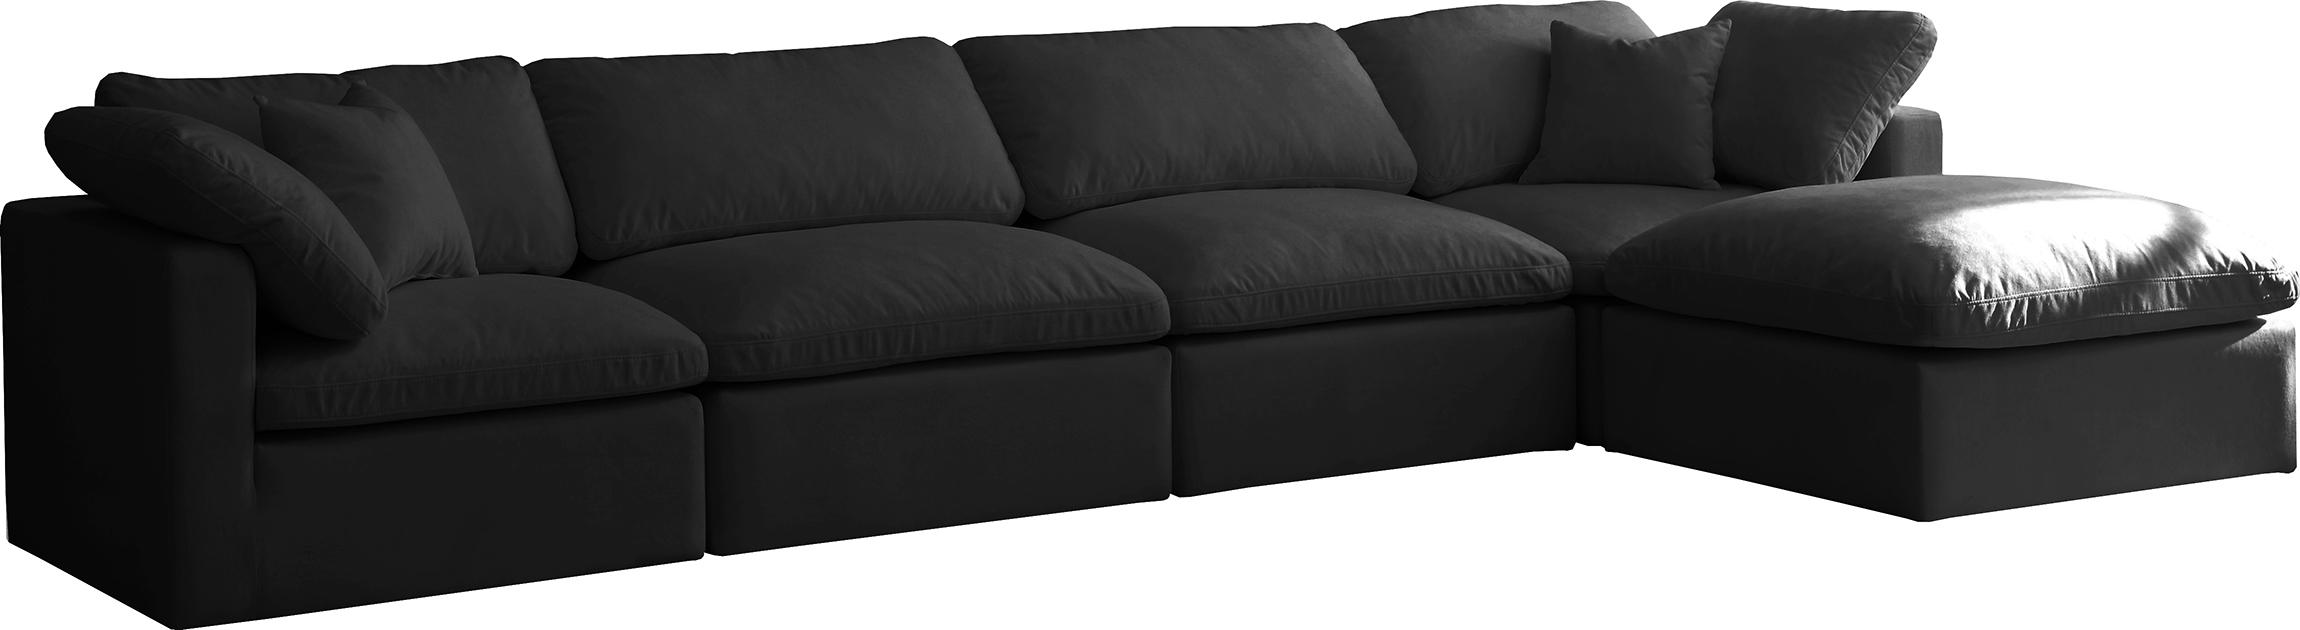 Contemporary, Modern Modular Sectional Sofa Cloud BLACK BLACK-Sec-Cloud in Black Fabric